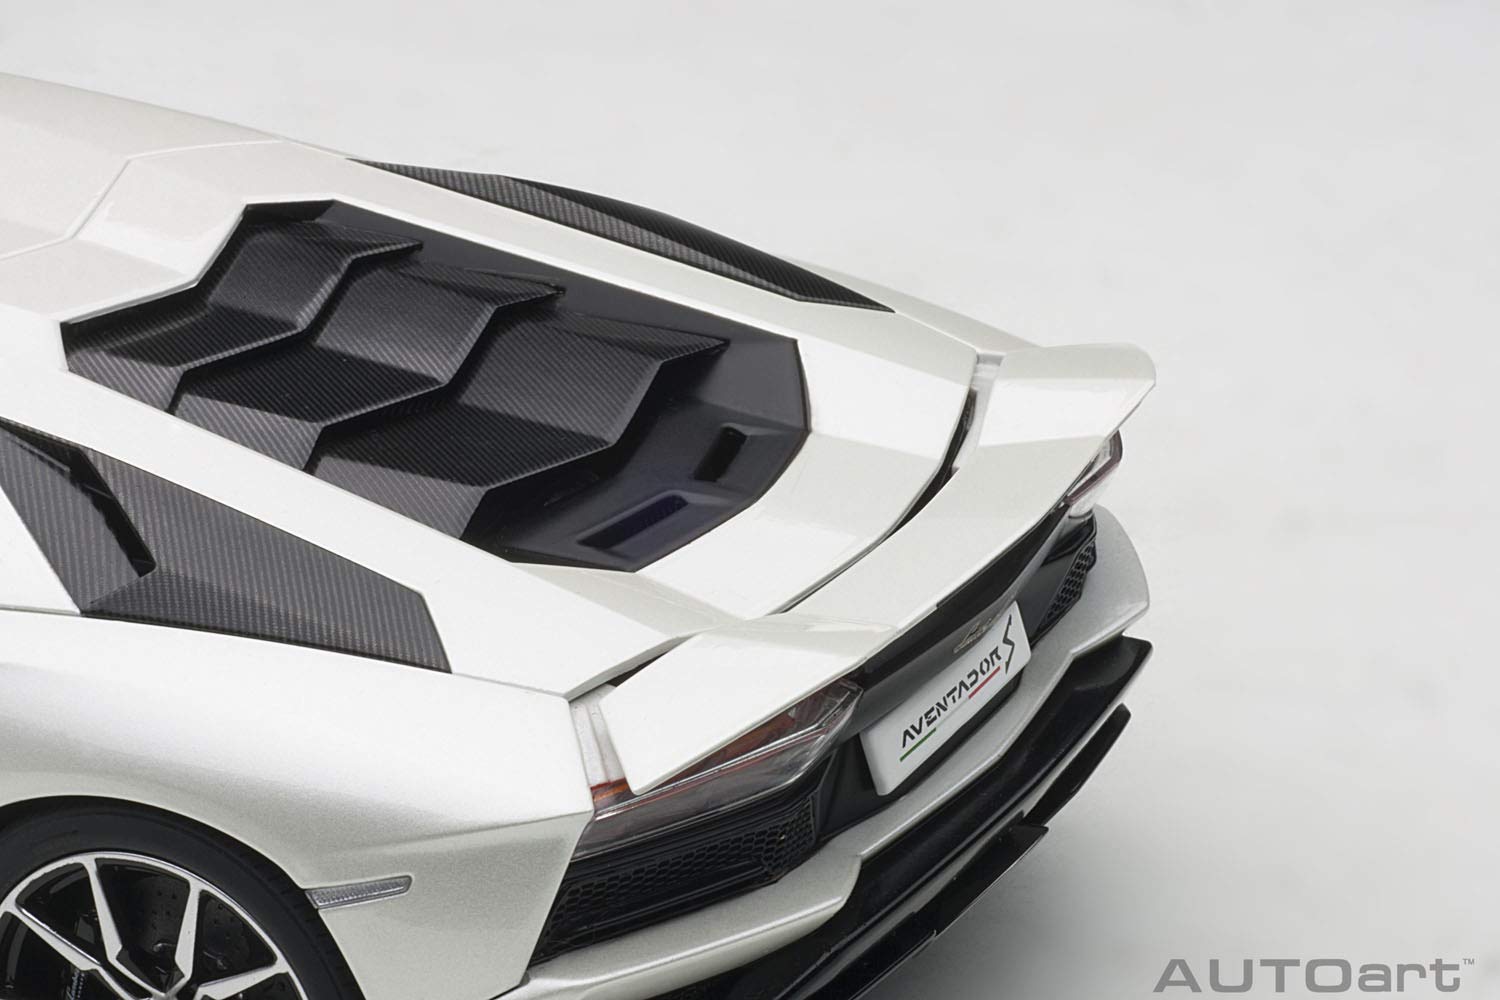 Mua AUTOart 1/18 Lamborghini Aventador S, Pearl White, Finished Product  trên Amazon Nhật chính hãng 2023 | Giaonhan247